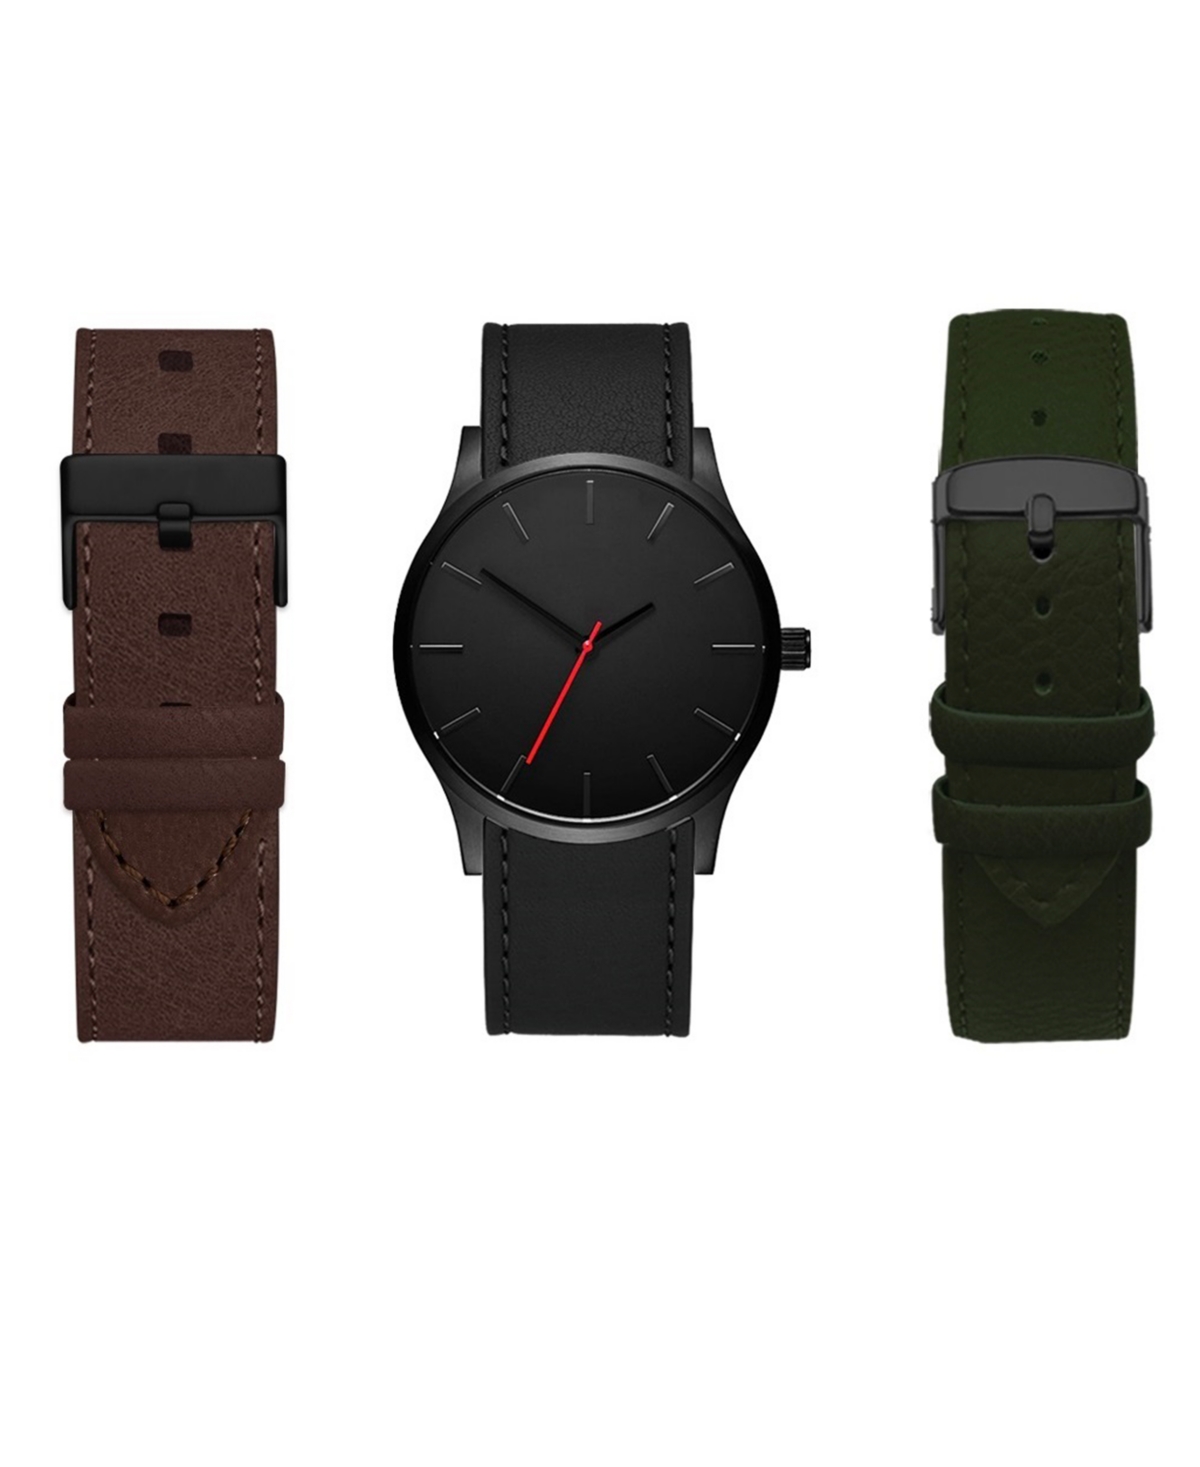 Men's Quartz Dial Black Leather Strap Watch, 42mm with Interchangeable Straps, Set of 3 - Multi